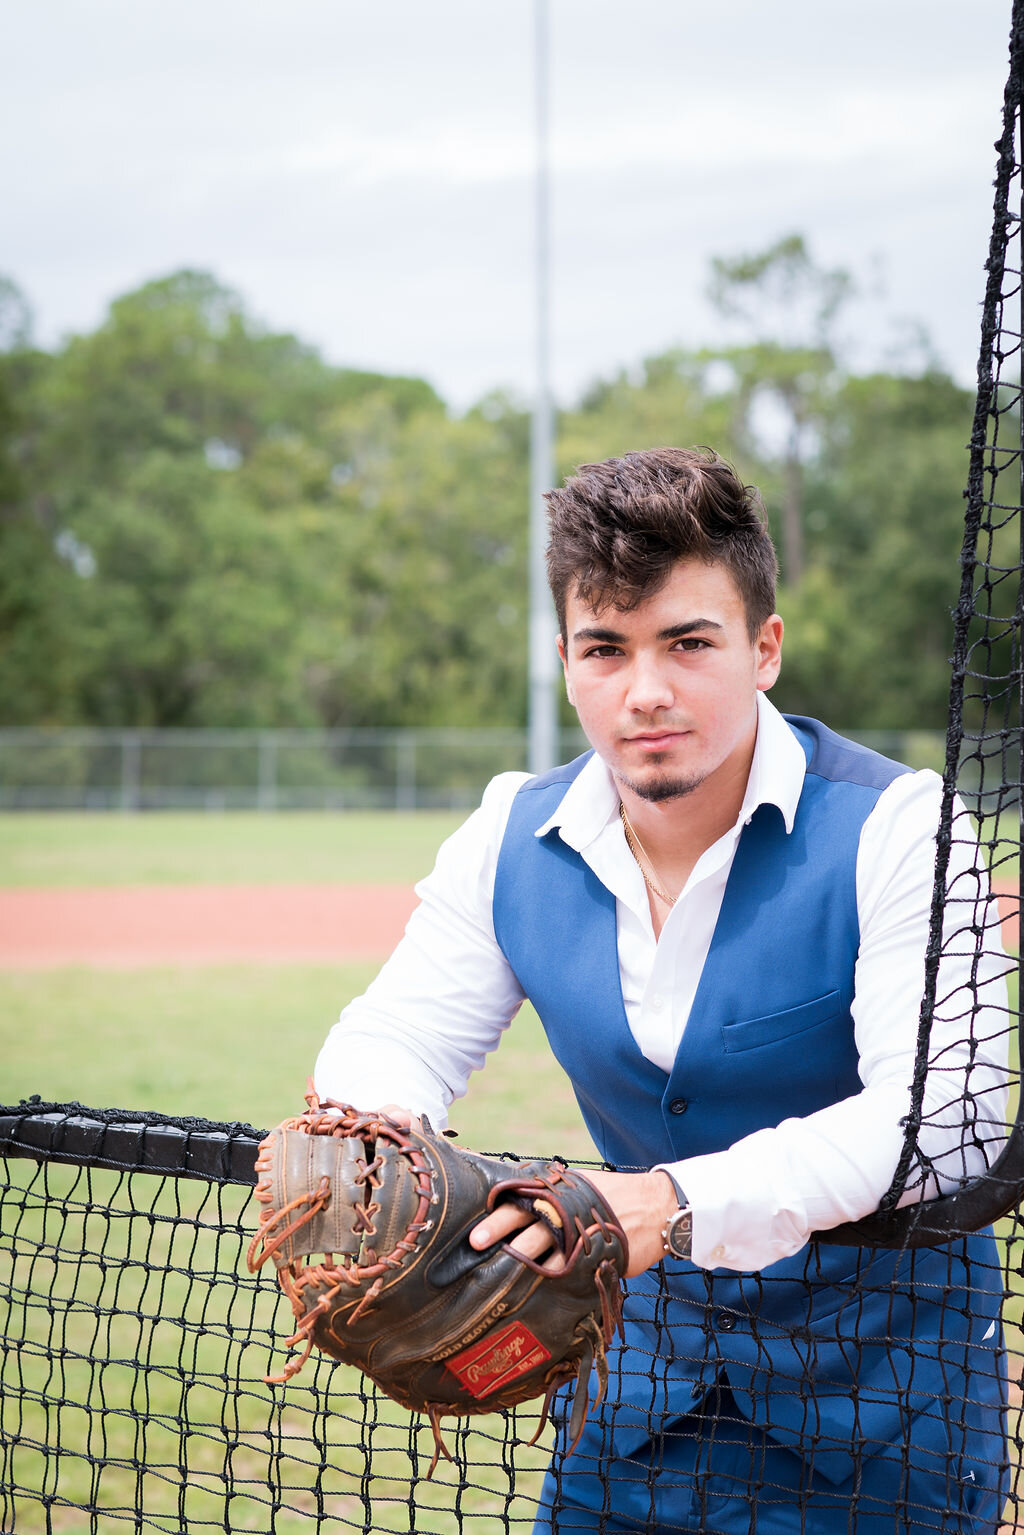 baseball photography poses